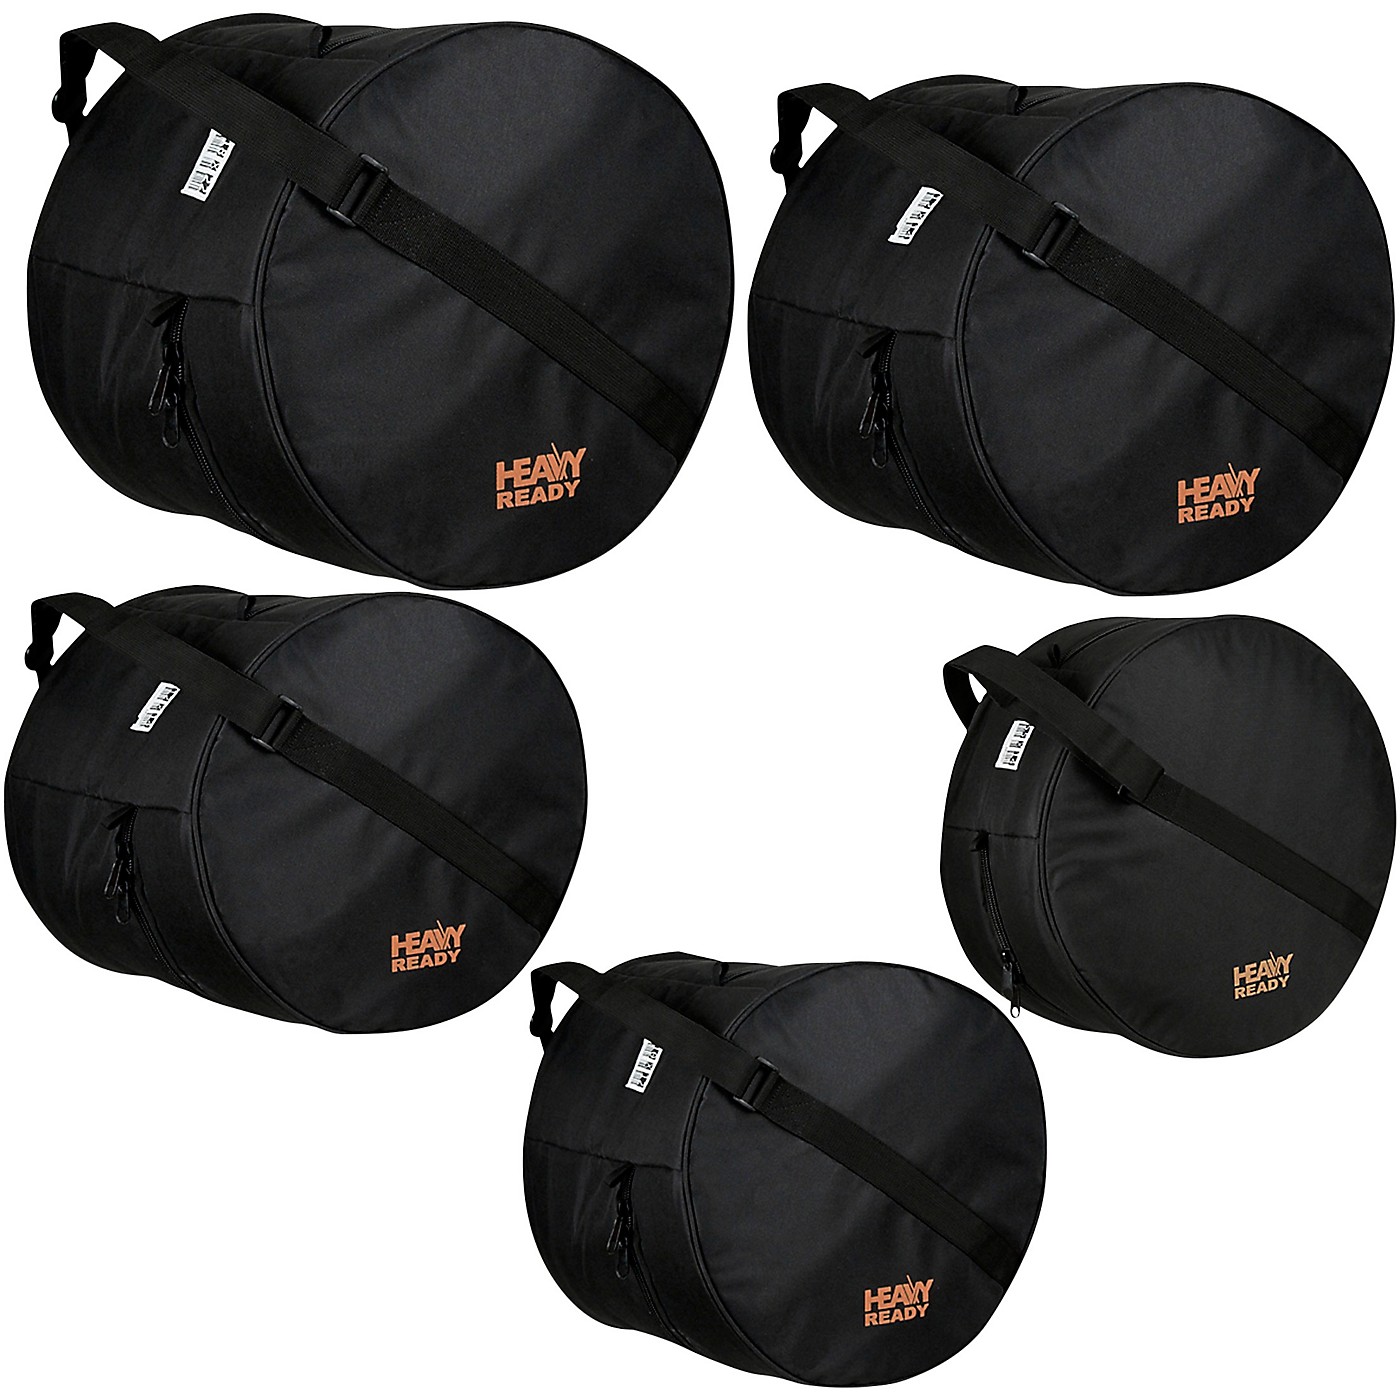 Protec Heavy Ready Series Standard 4 Drum Bag Set thumbnail